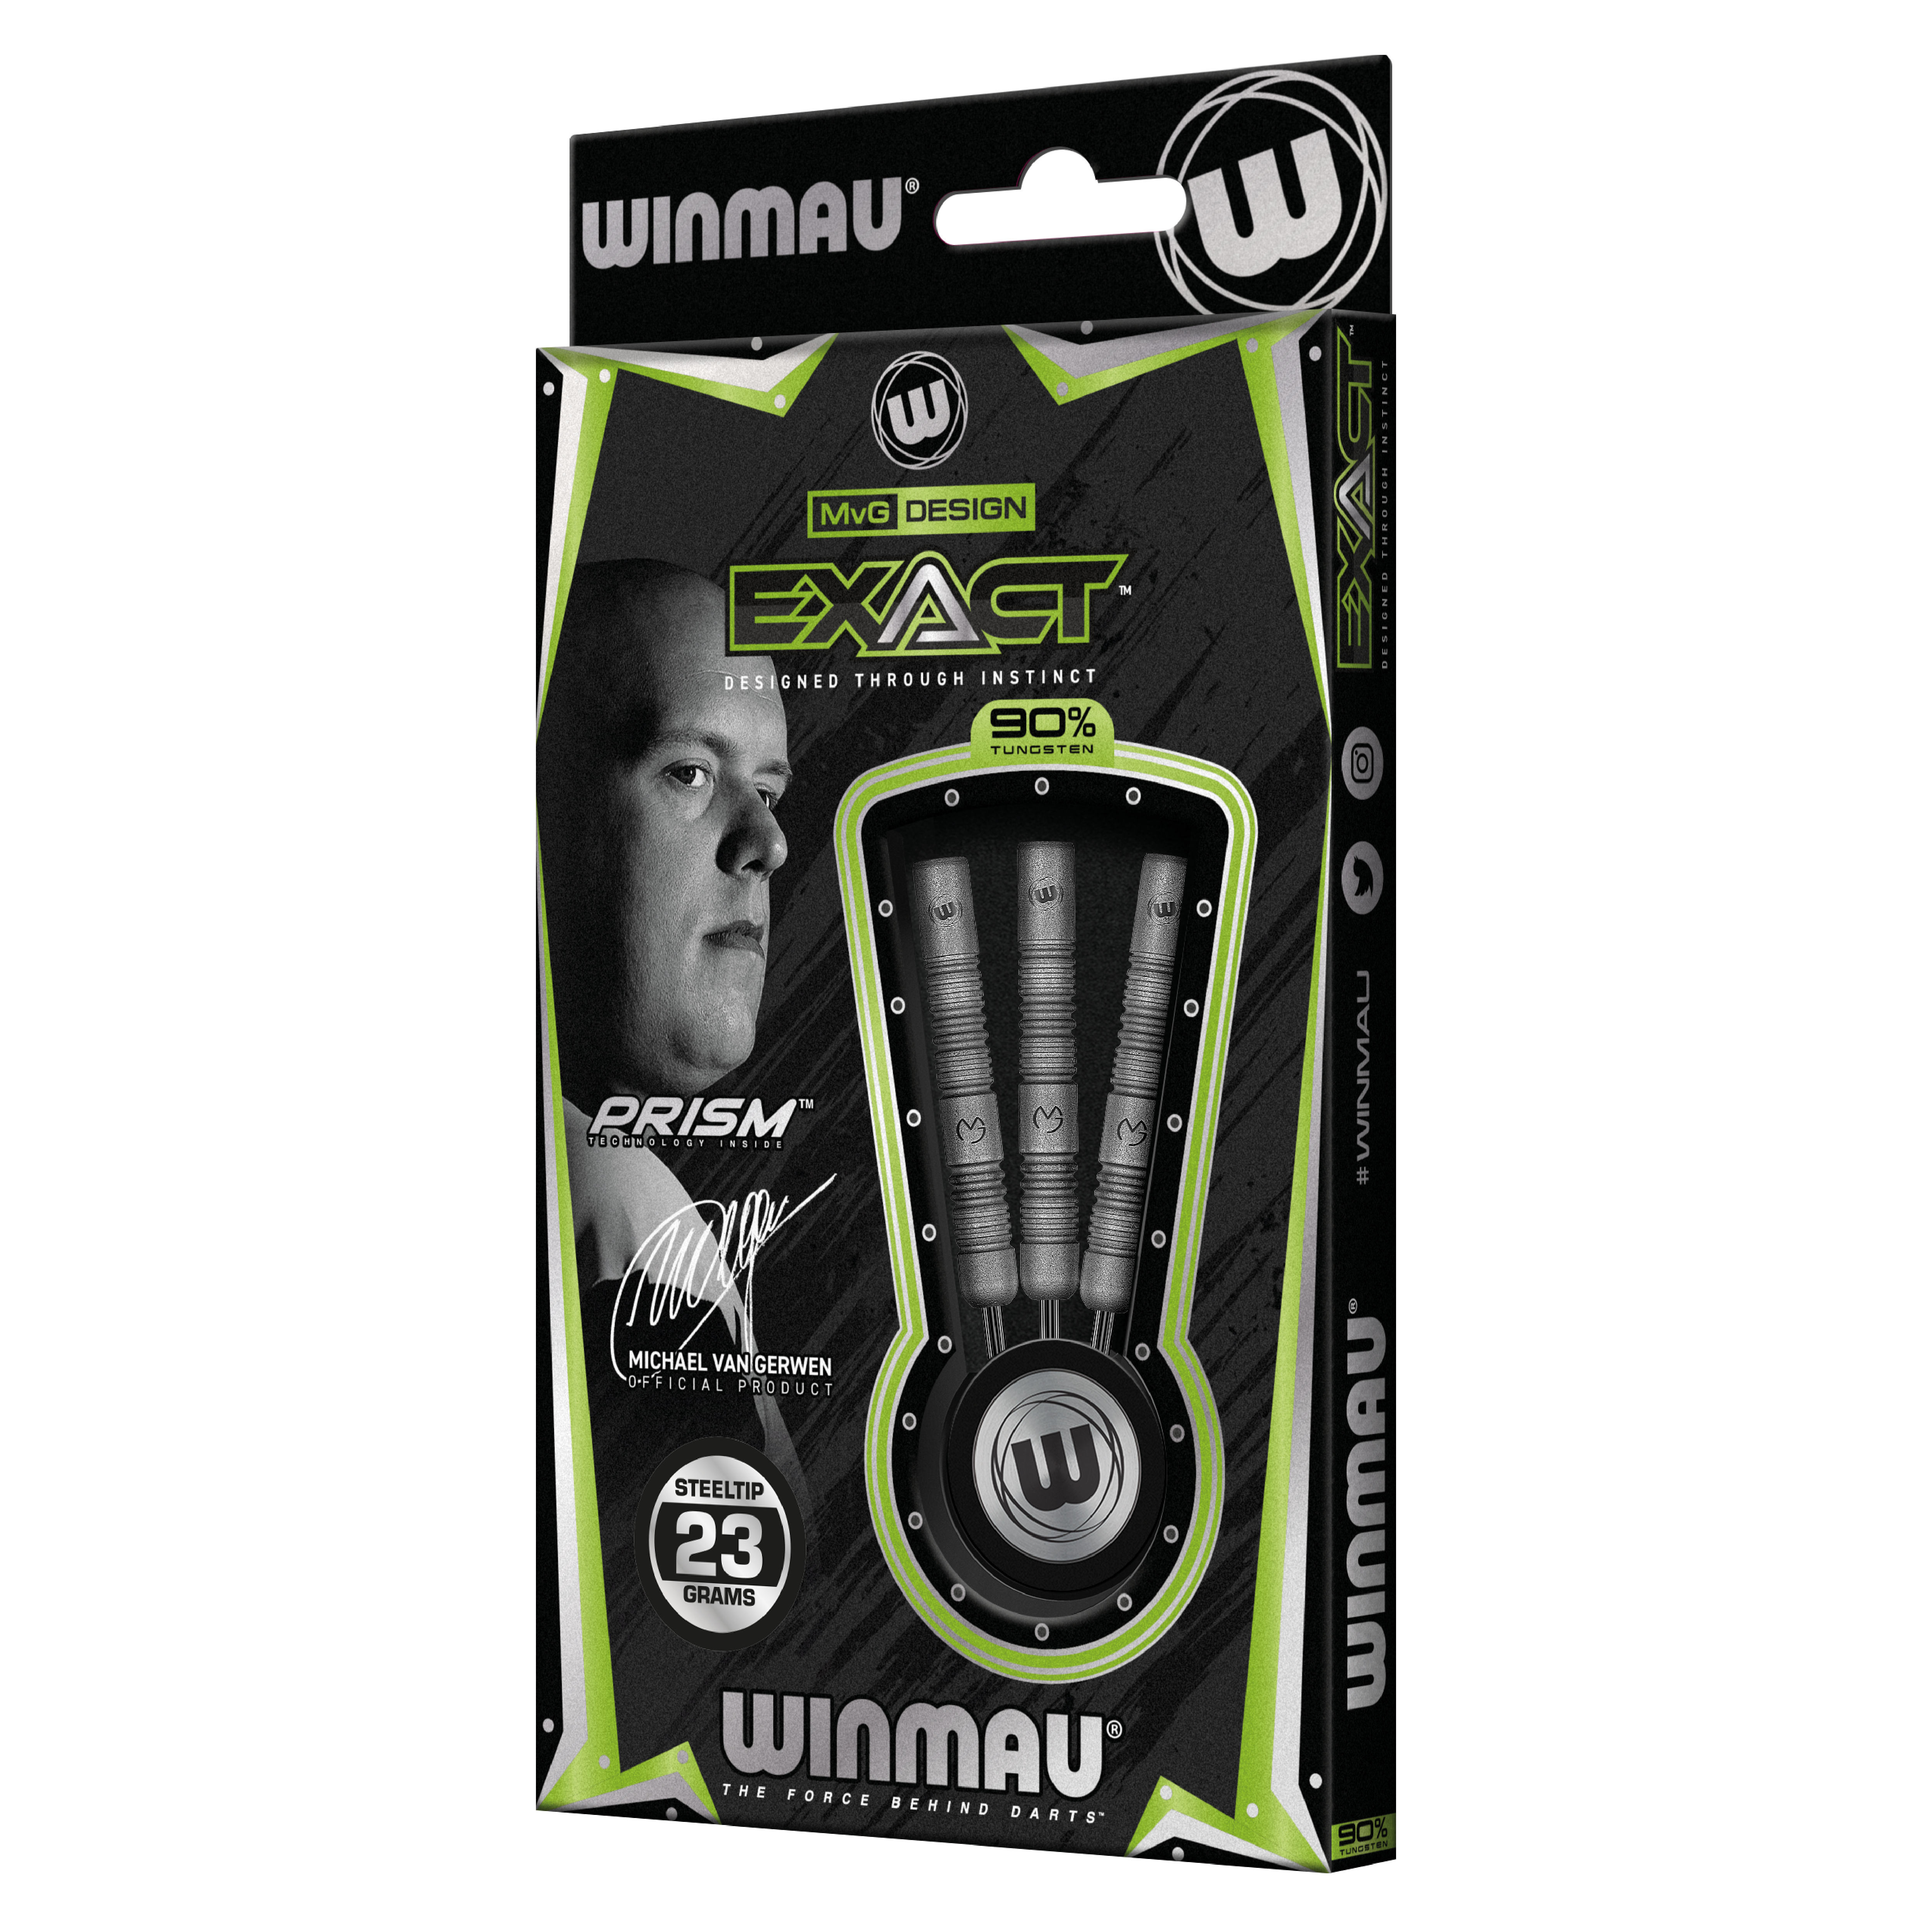 Winmau MVG Exact steeltip darts 23 gram